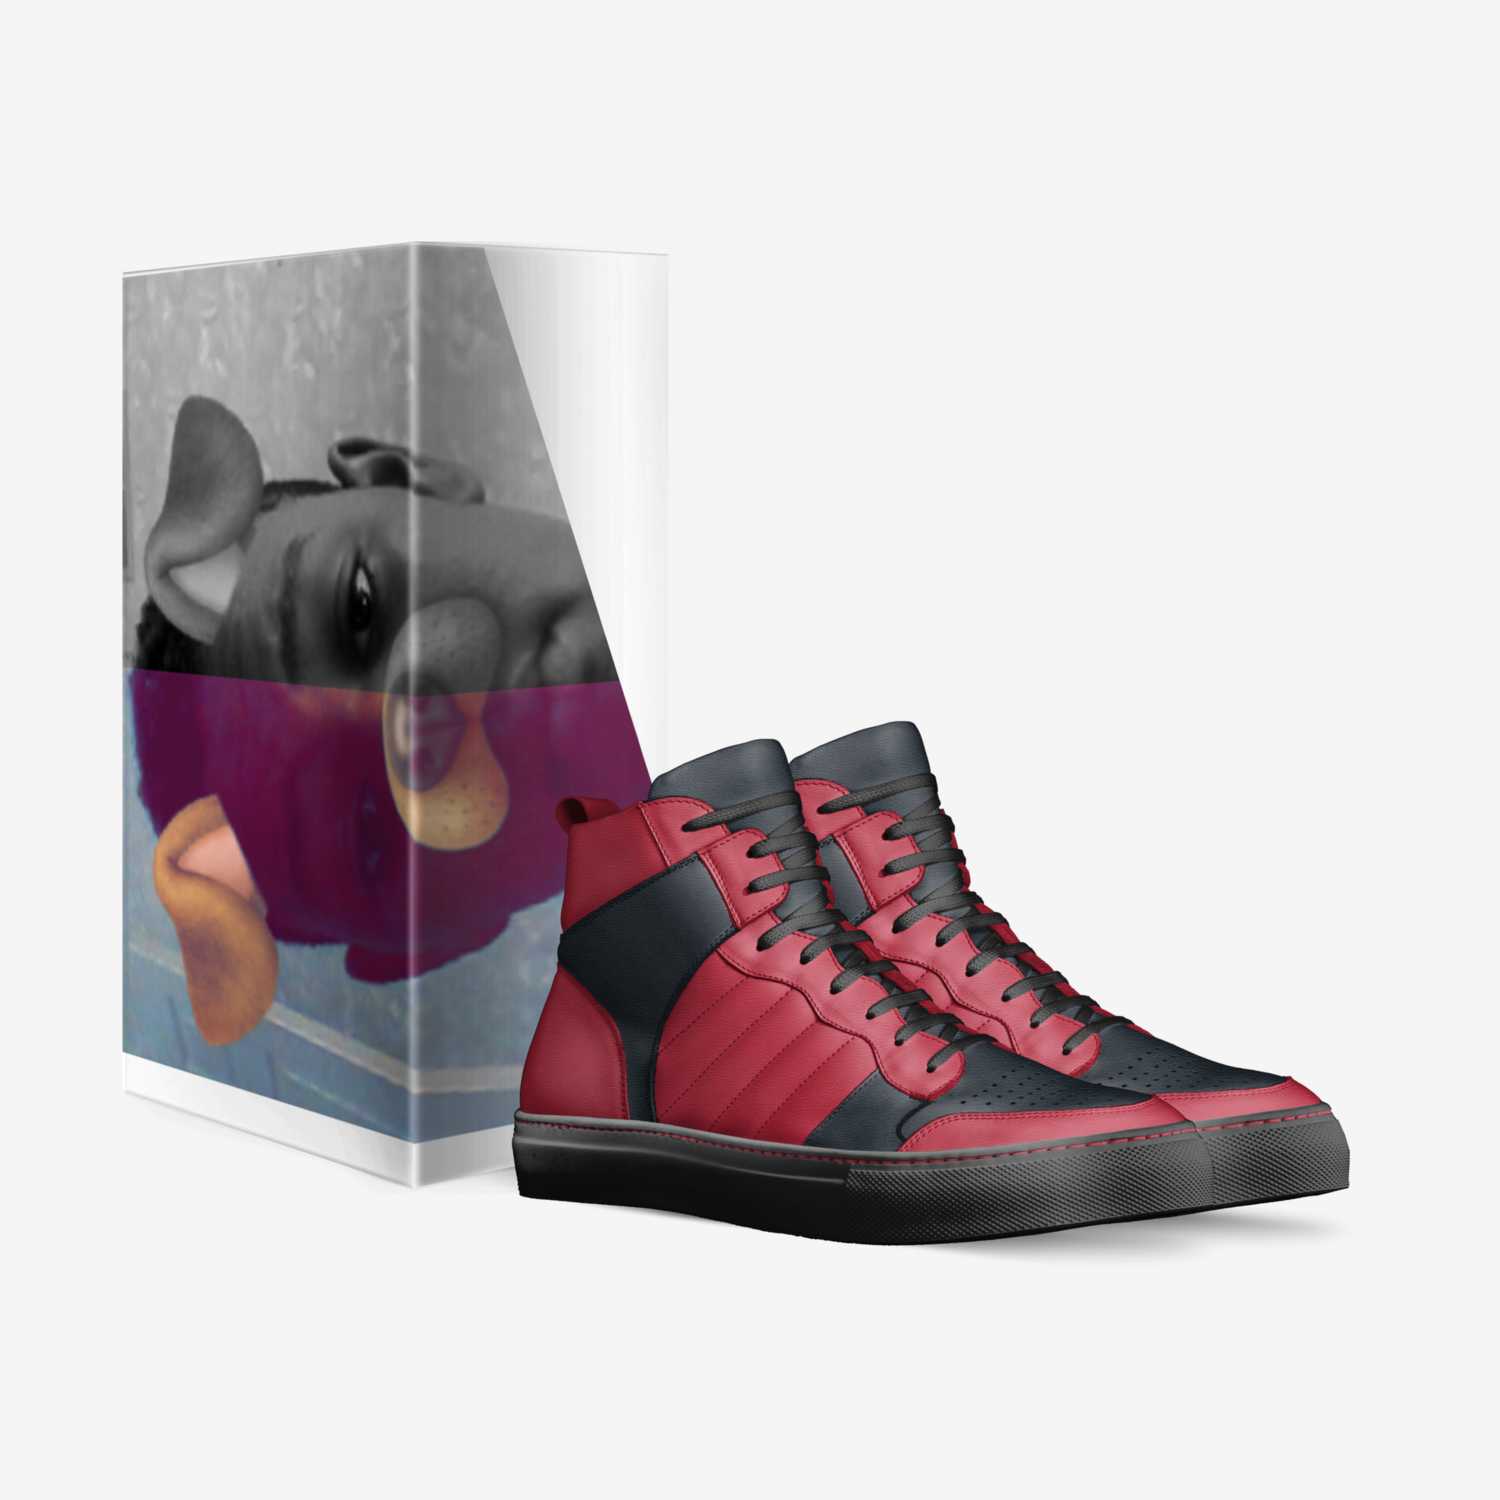 Slashes  custom made in Italy shoes by Shaqir Freeman | Box view